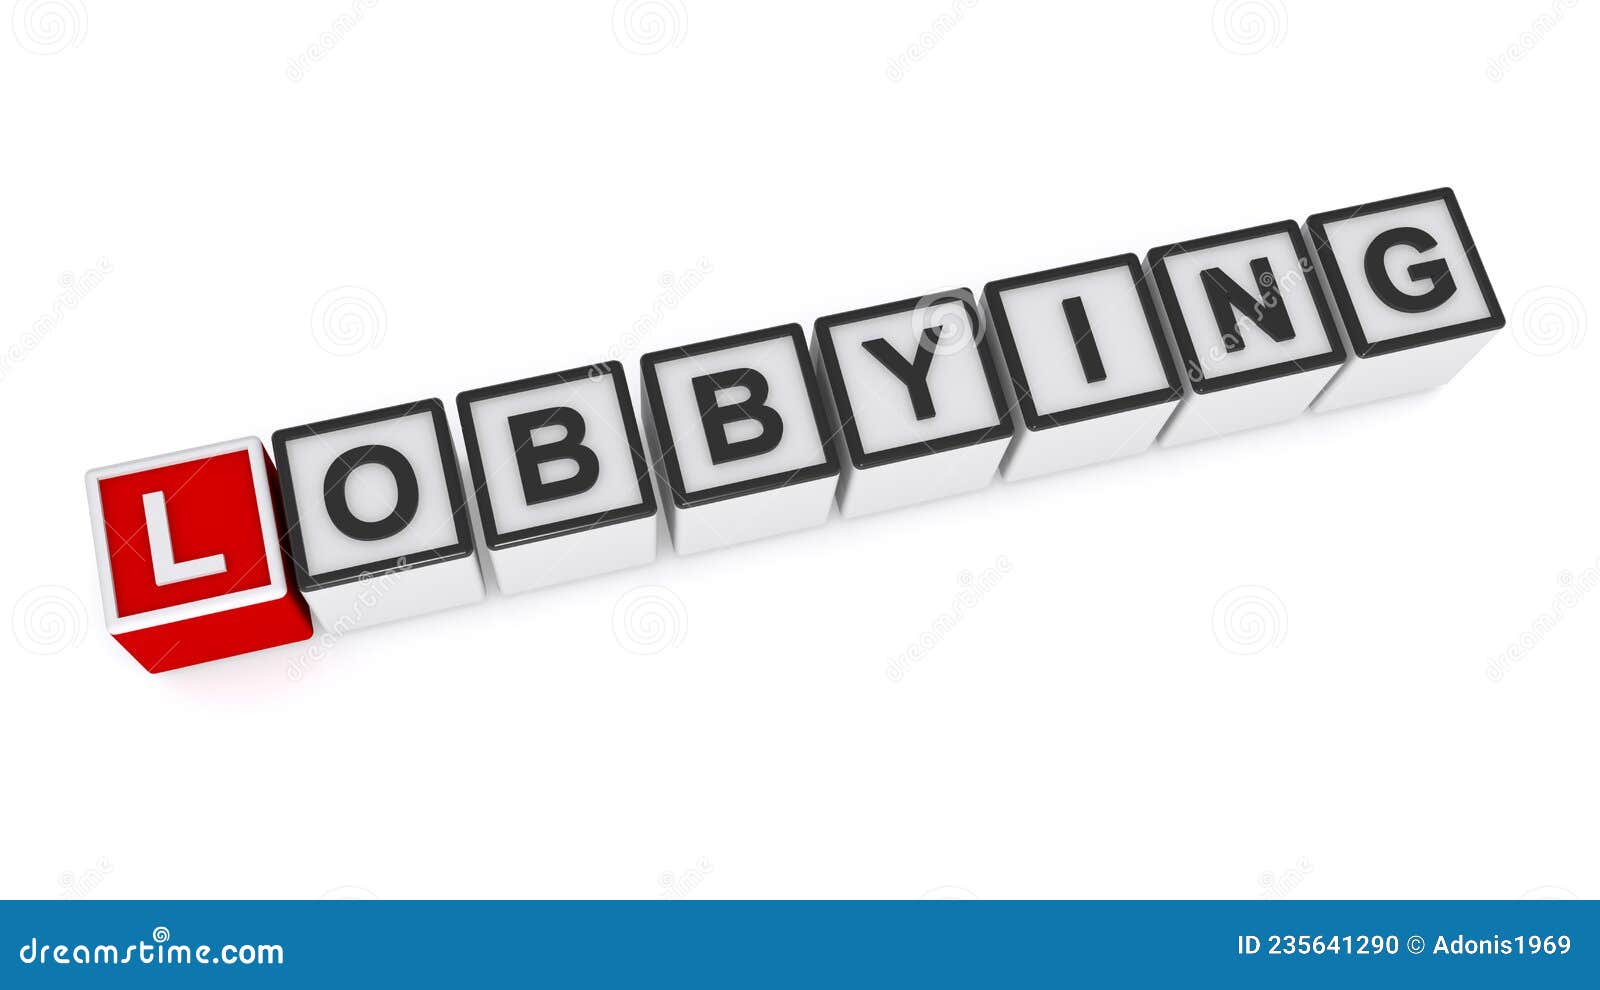 lobbying word block on white